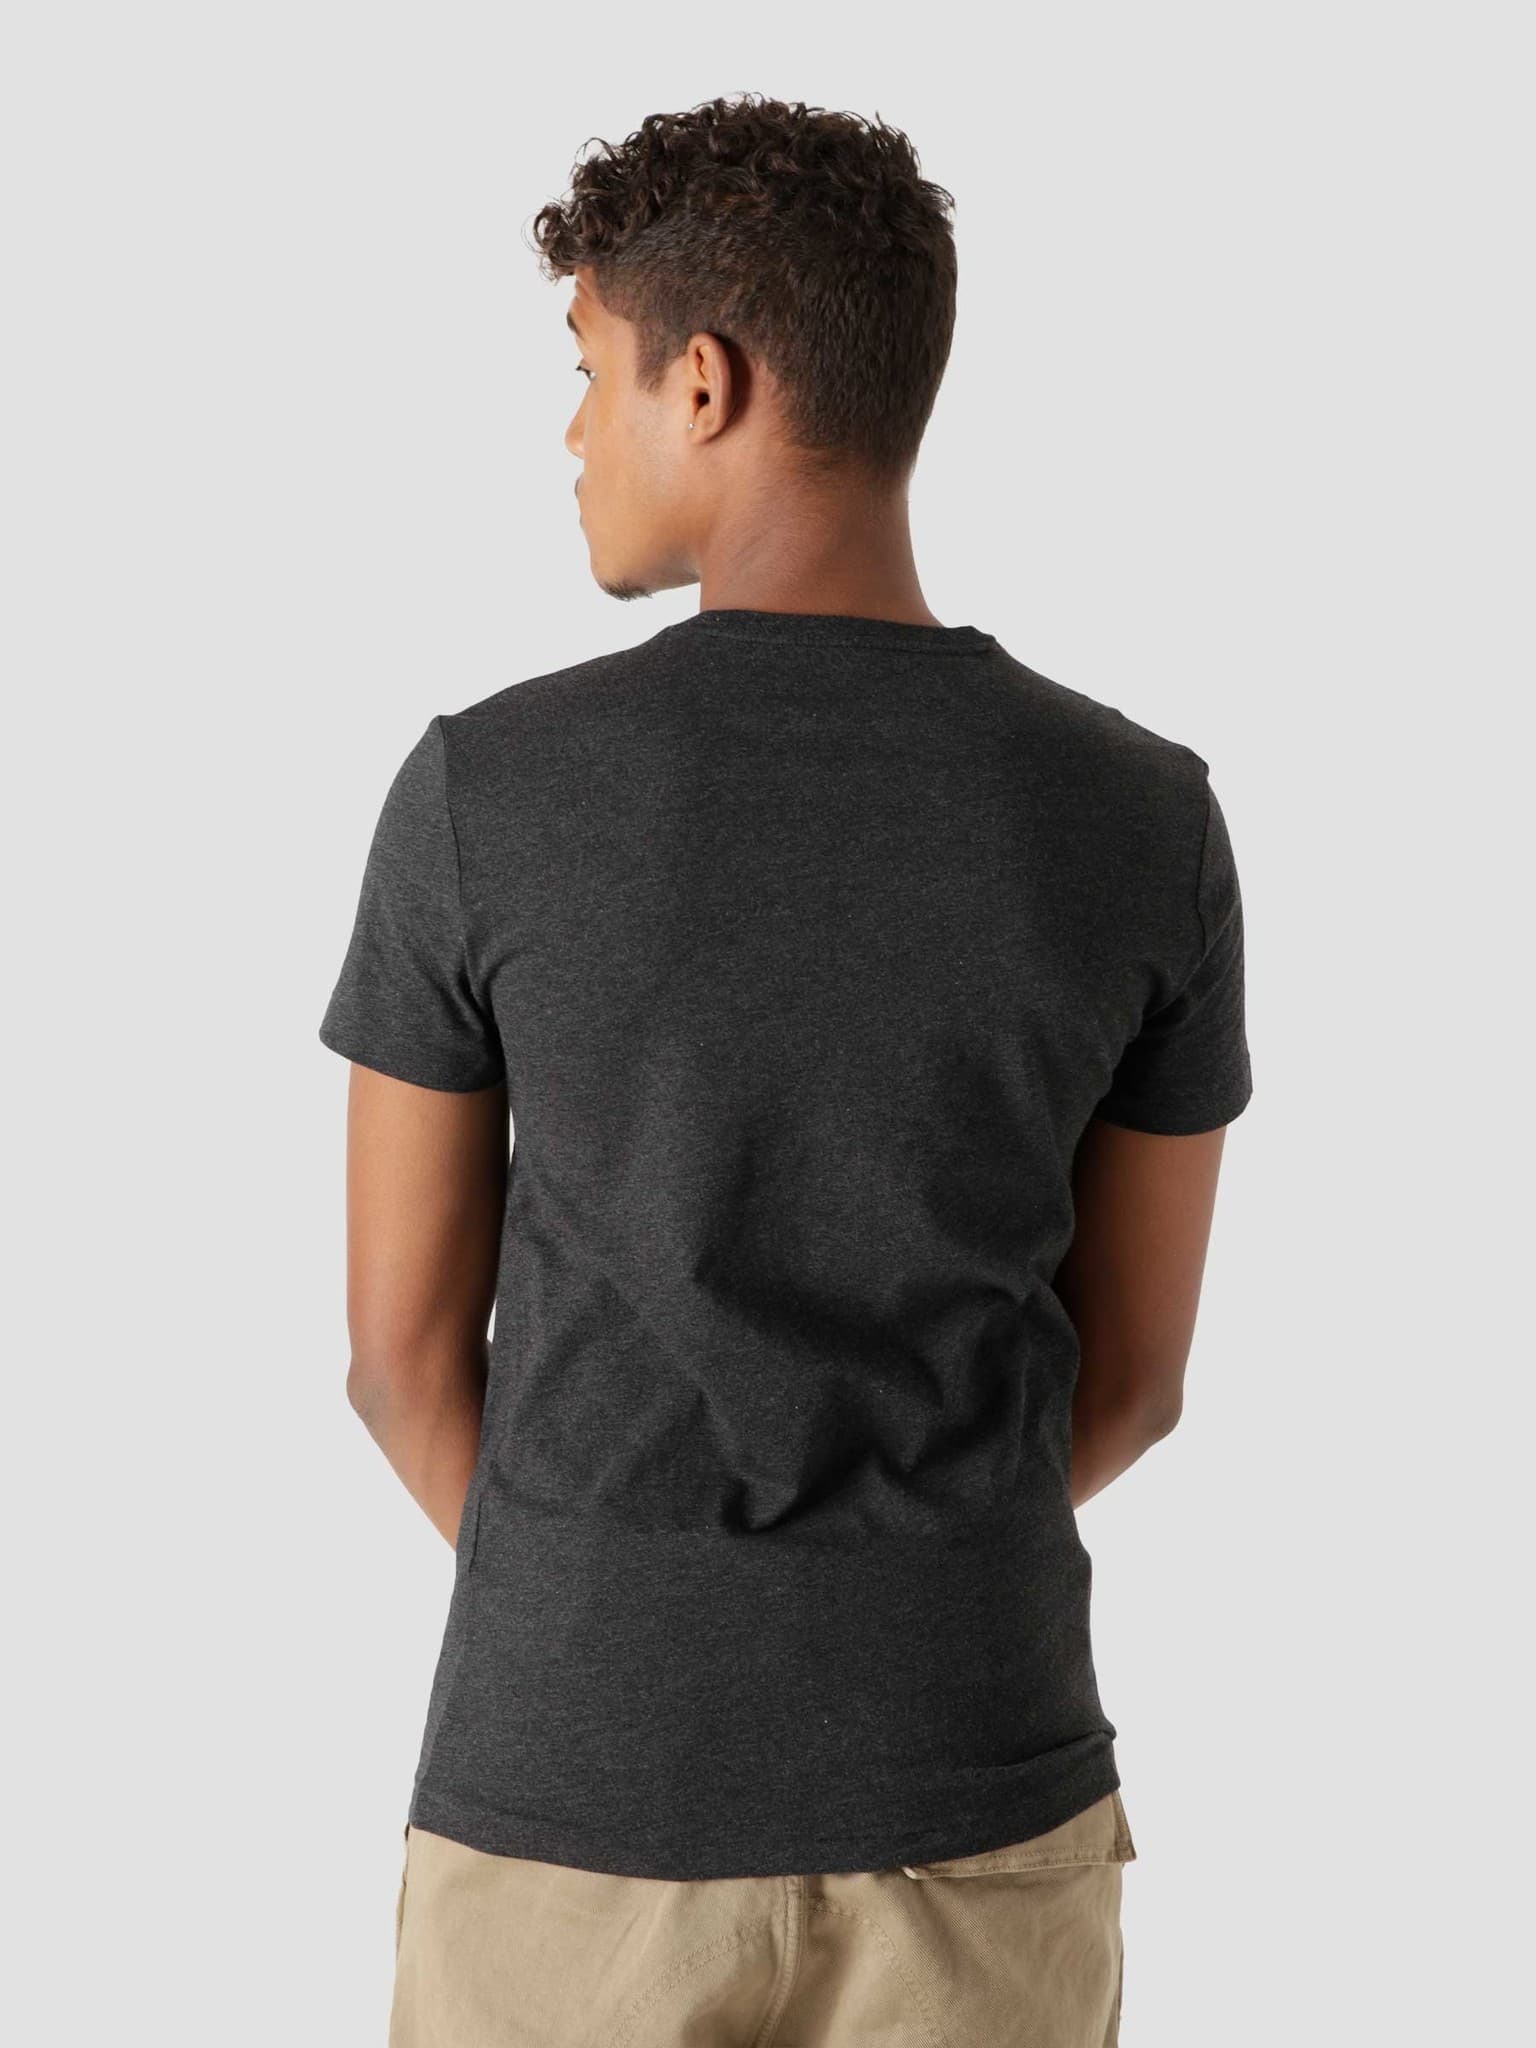 Polo Ralph Lauren T-Shirt Black Marl Heather-C9590 - Freshcotton